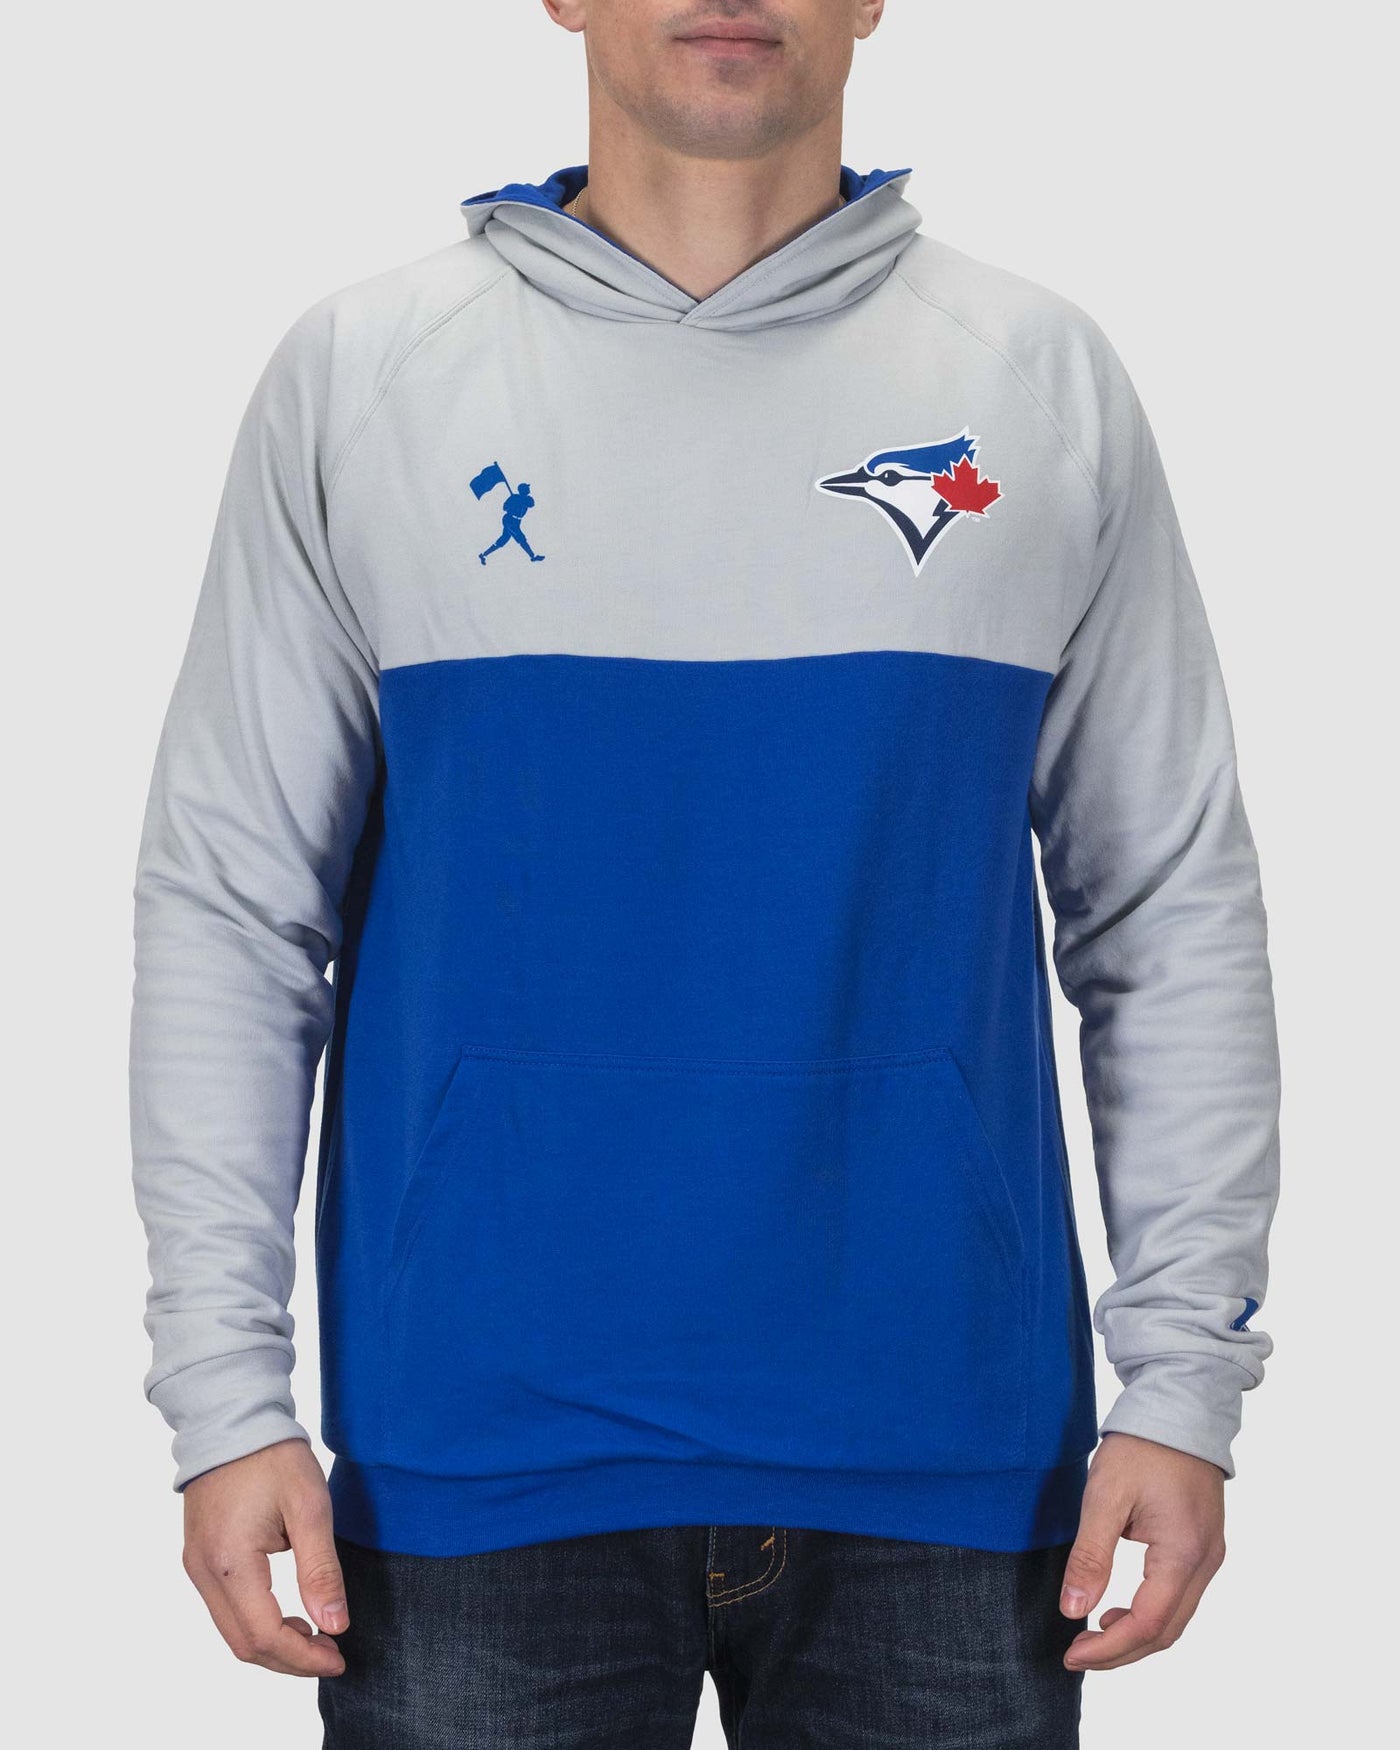 Mens Toronto Blue Jays Fashion Colour Logo T-Shirt